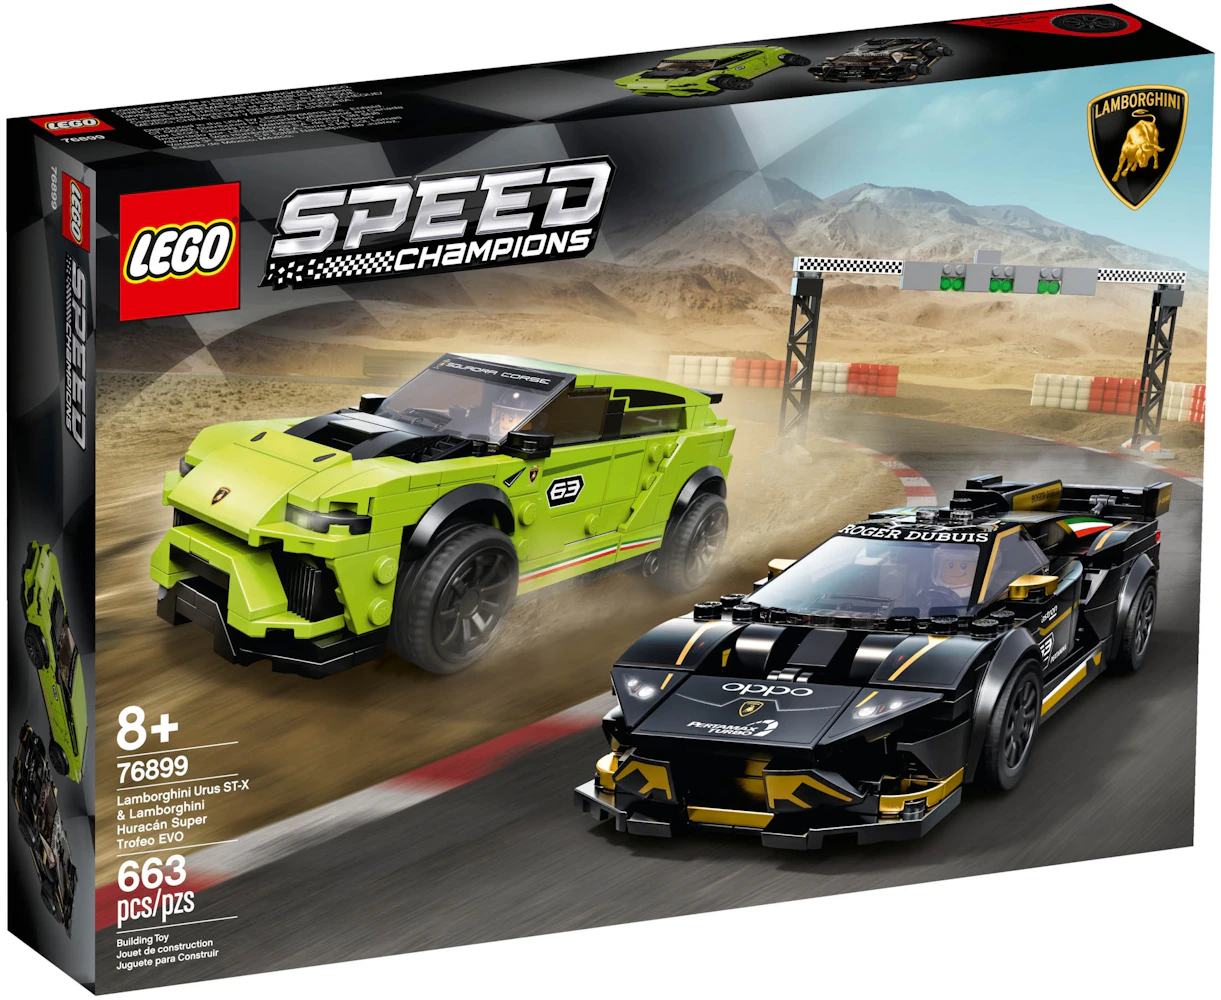 LEGO Speed Champions Lamborghini Urus ST-X & Lamborghini Huracán Super  Trofeo EVO Set 76899